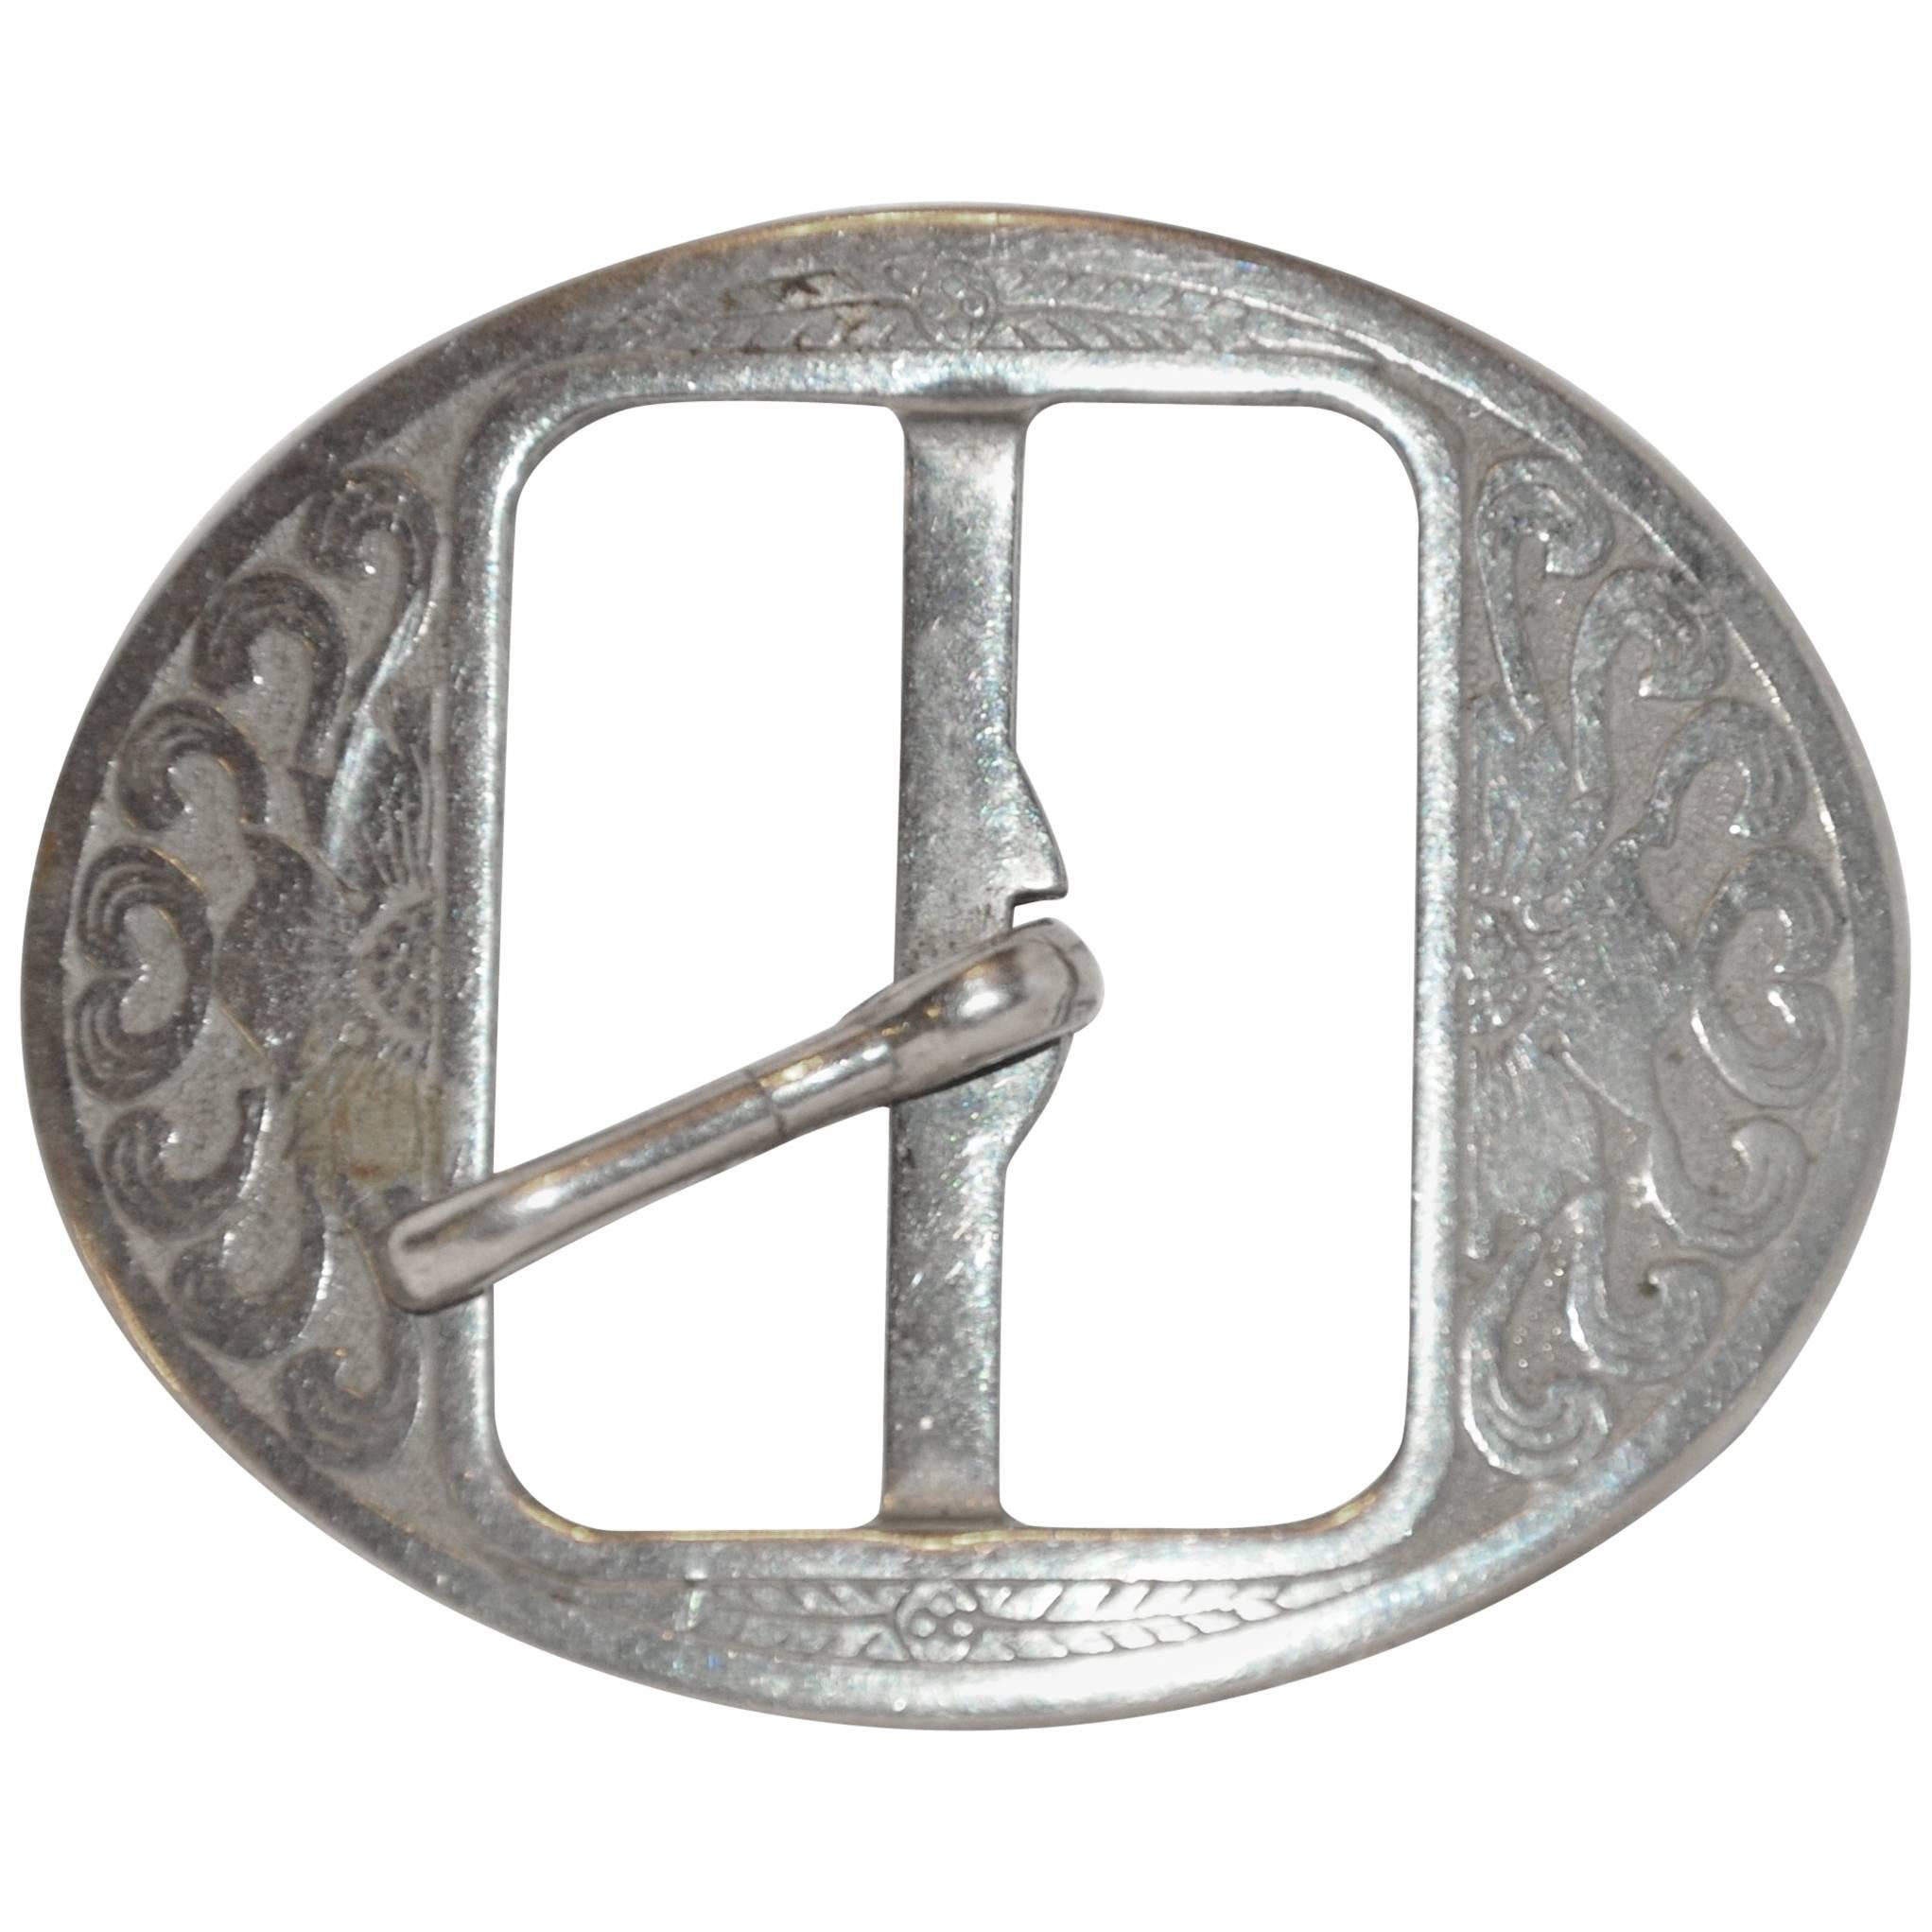 Vintage "Art Nouveau" Hand-Etched Silver Hardware Belt Buckle